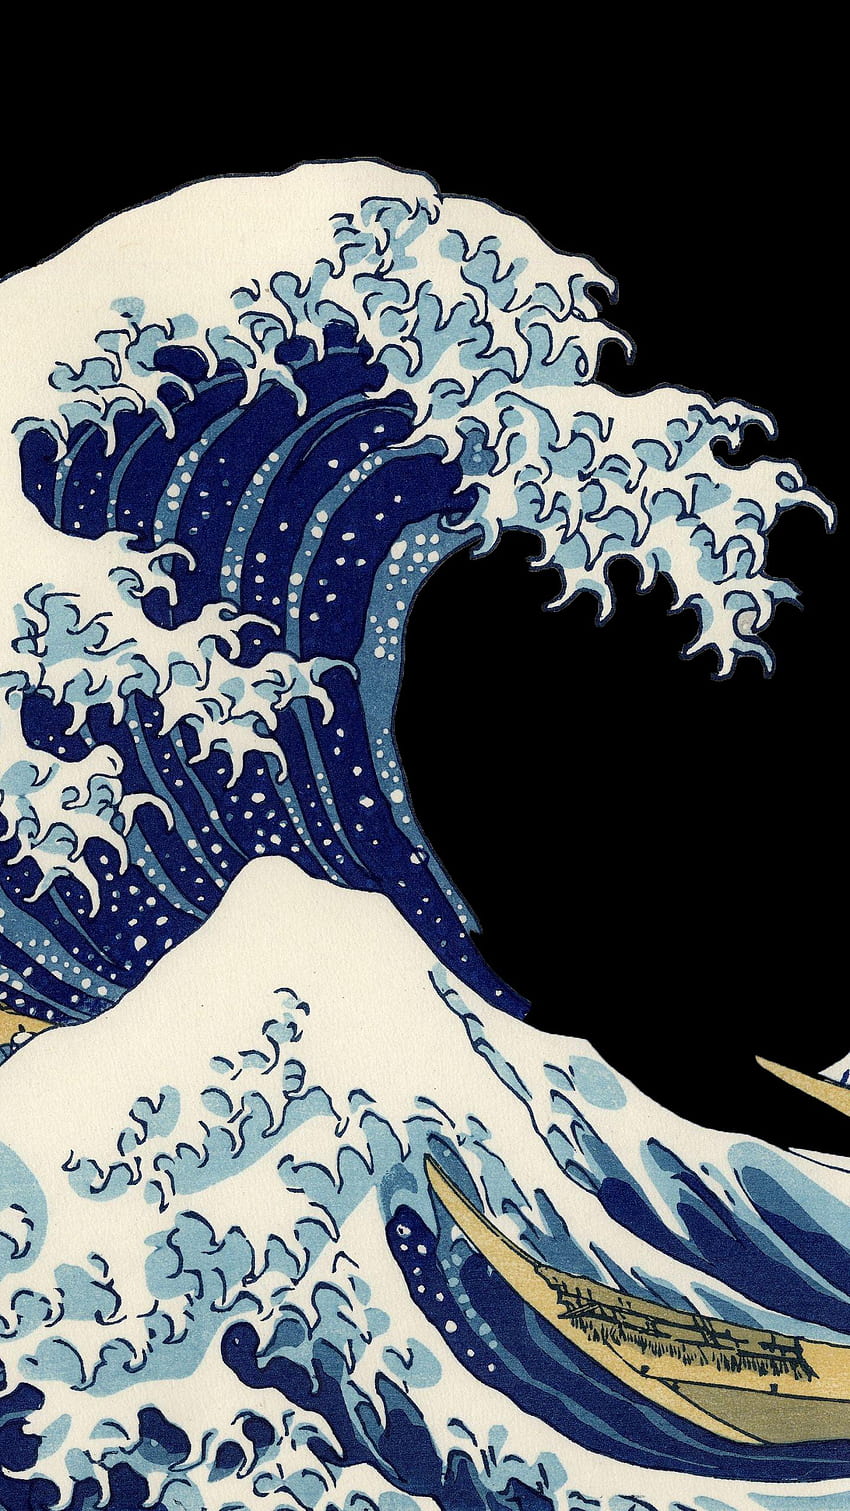 La gran ola de Kanagawa, Wave AMOLED fondo de pantalla del teléfono